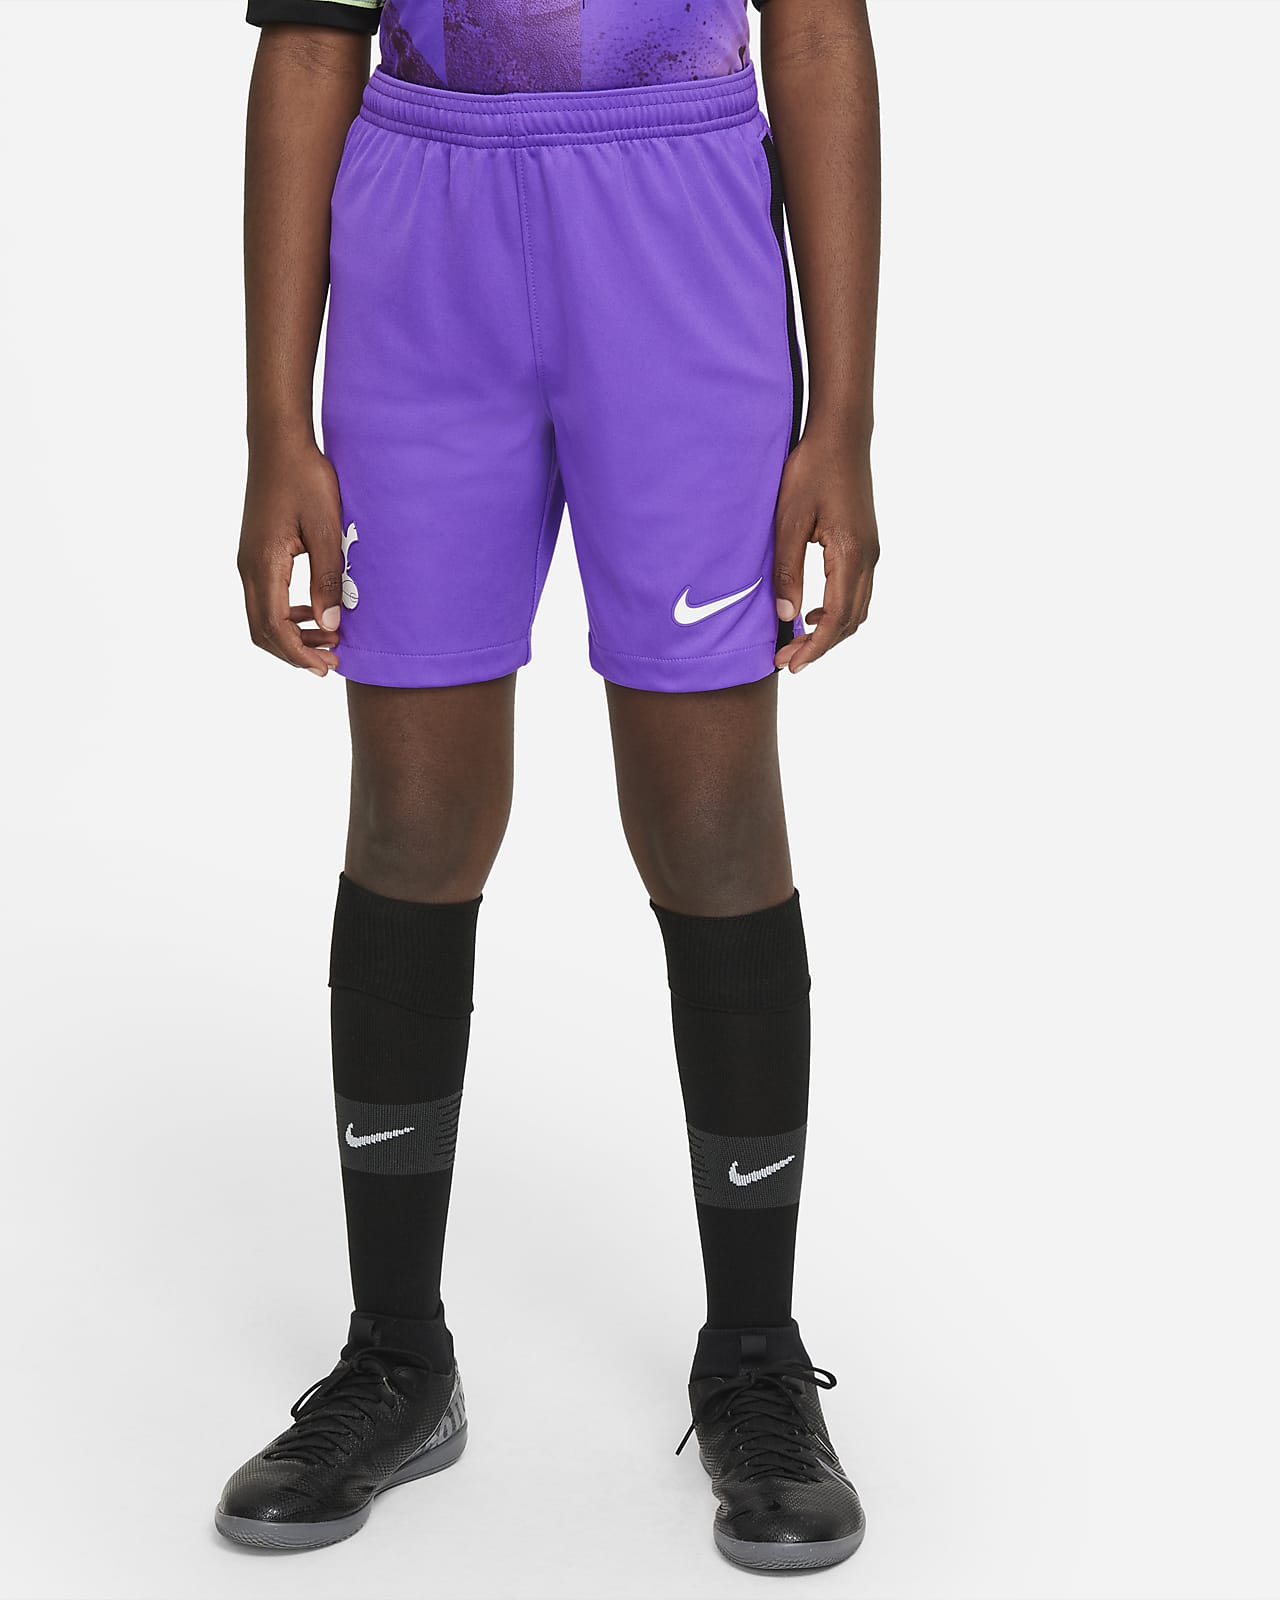 Tottenham Hotspur 2021/22 Stadium Third Nike Dri-FIT Fußball-Shorts für jüngere Kinder